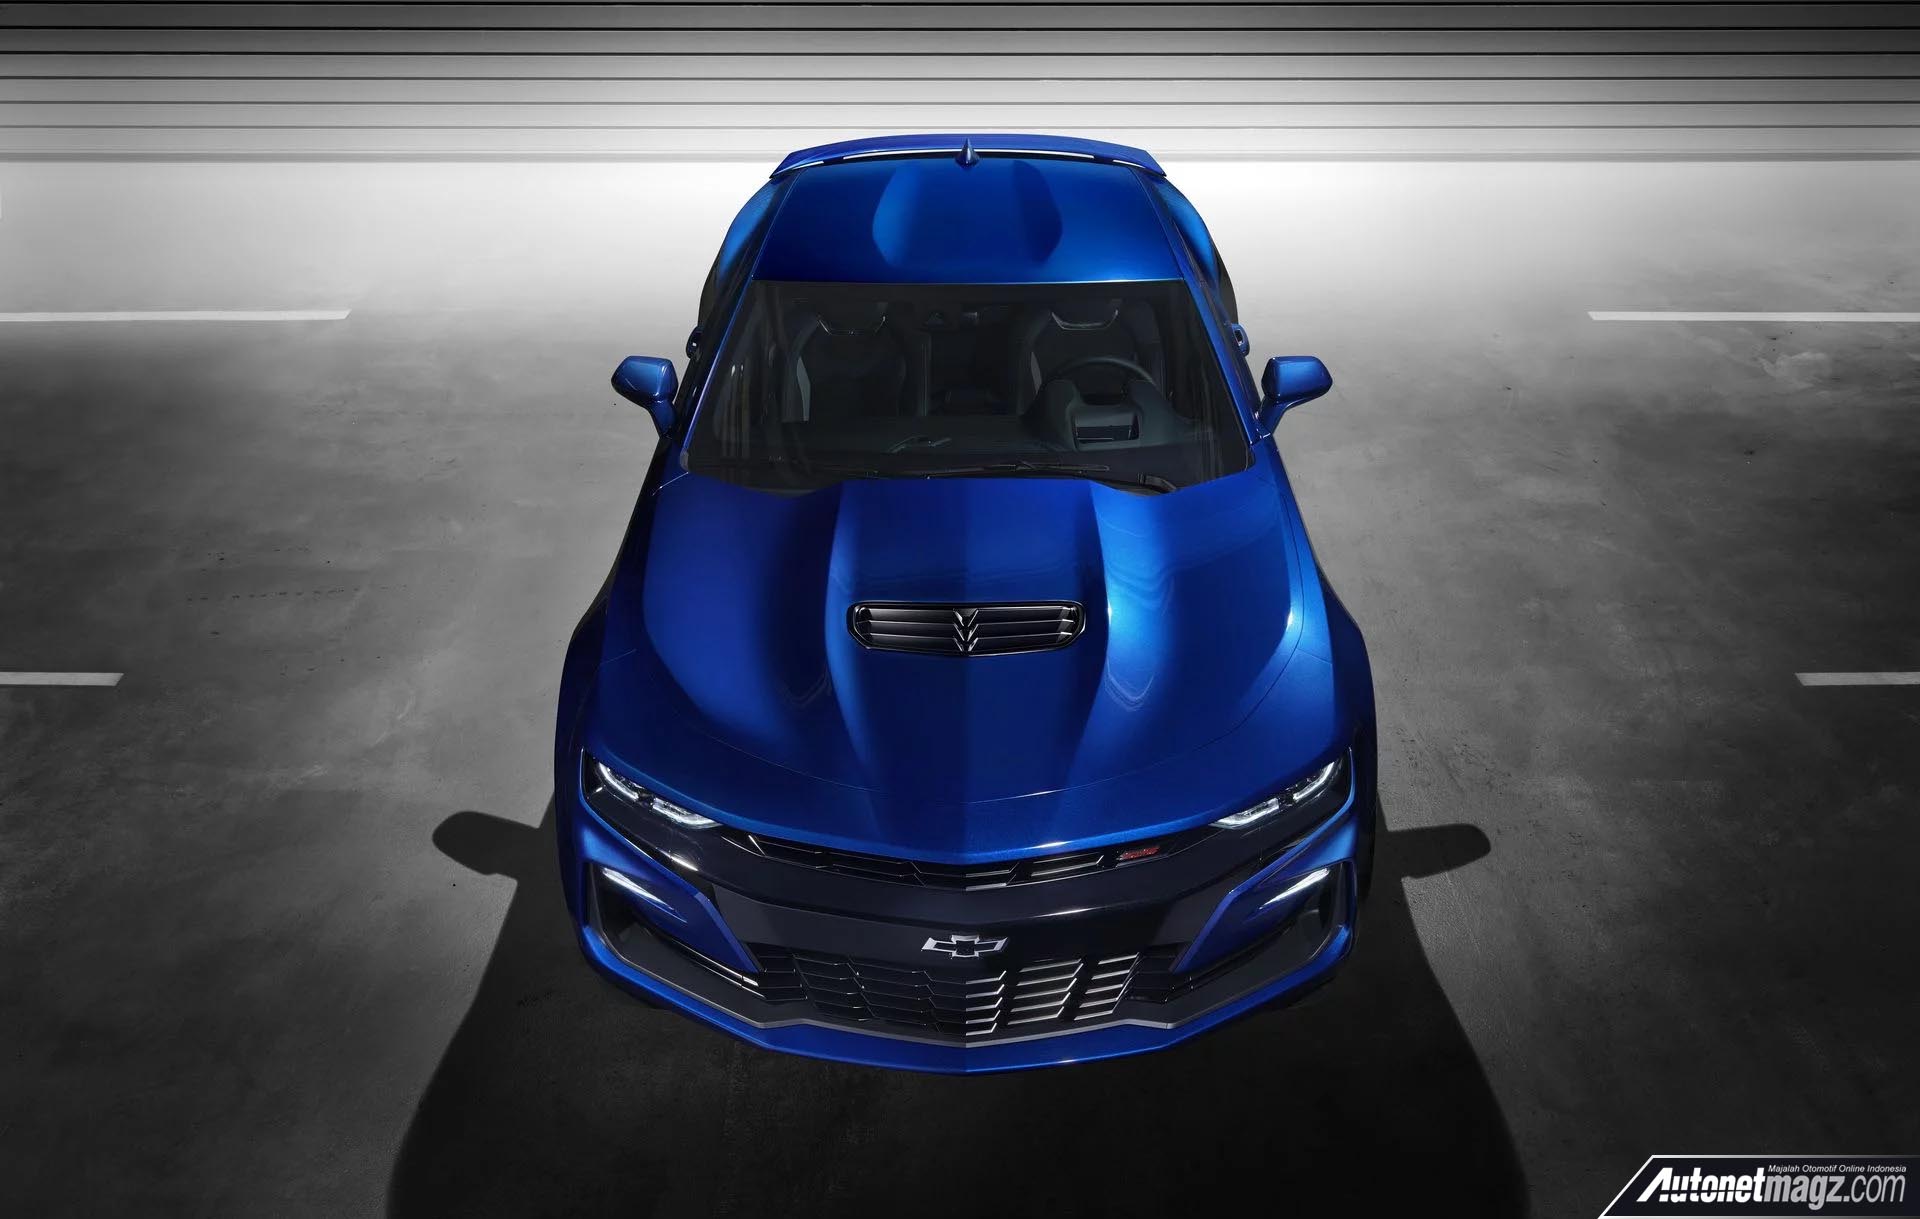 Berita, Chevrolet Camaro 2019 atas: Chevrolet Camaro 2019 Diperkenalkan, Ada Versi Turbo 1LE!